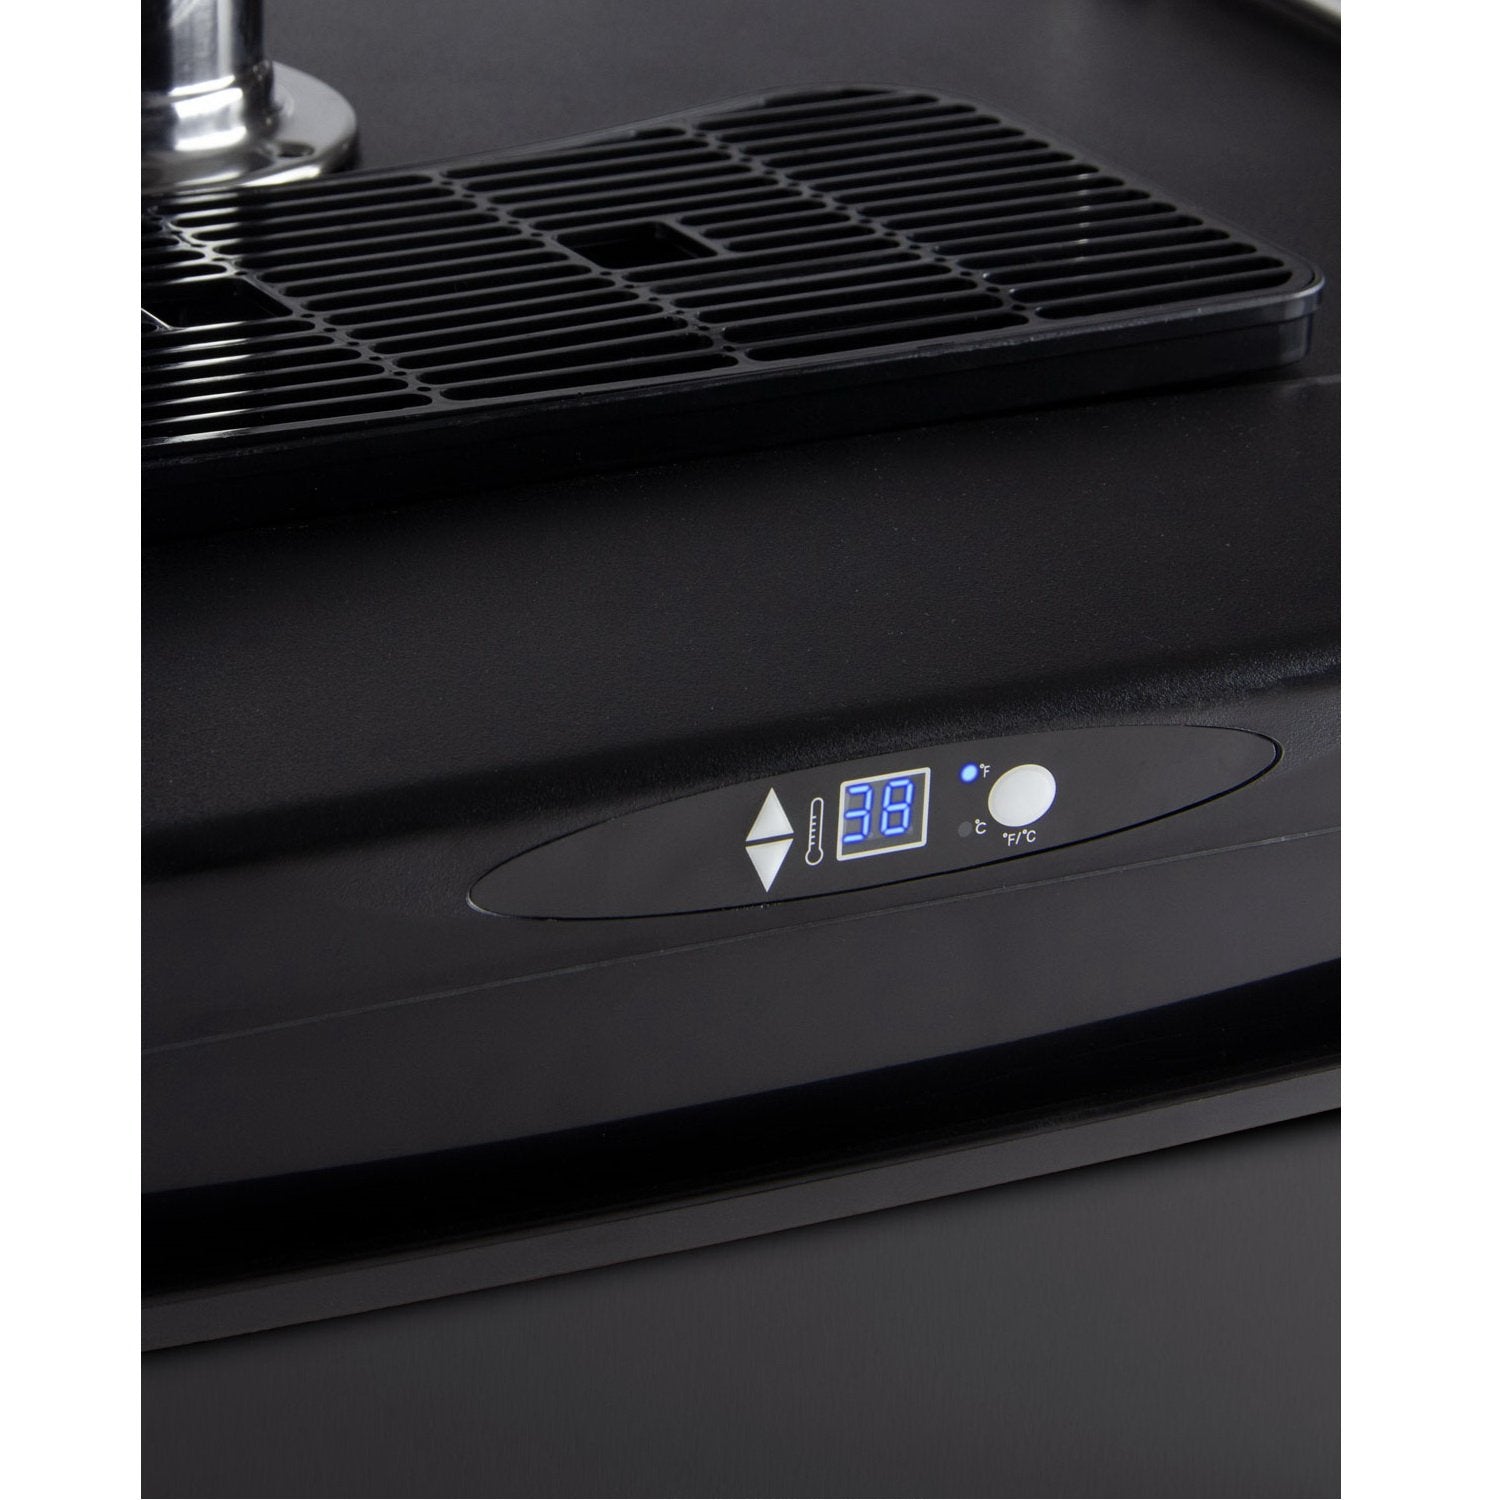 Kegco Single Tap Faucet Full Size Commercial Grade Digital Kegerator - Black Cabinet with Black Door